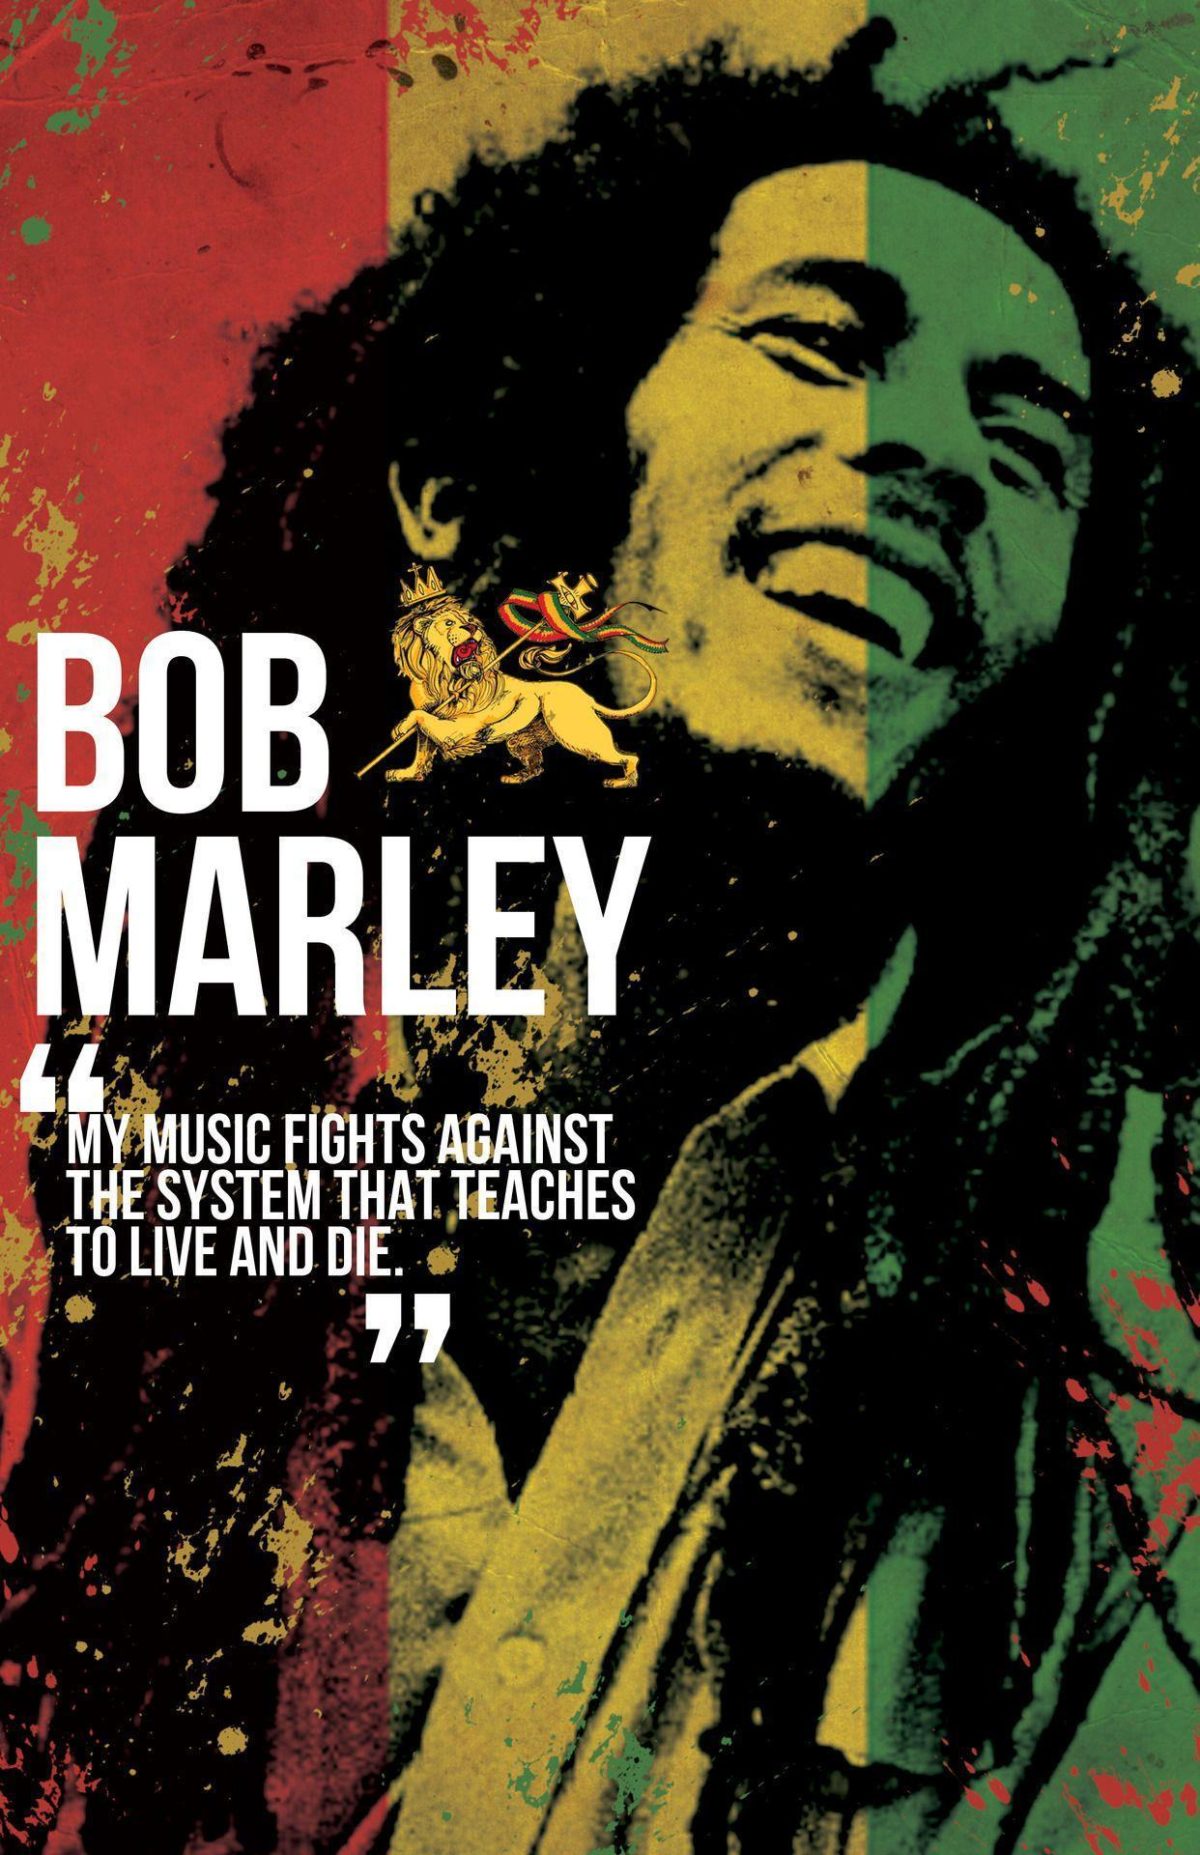 HD Bob Marley 4k Picture for Desktop